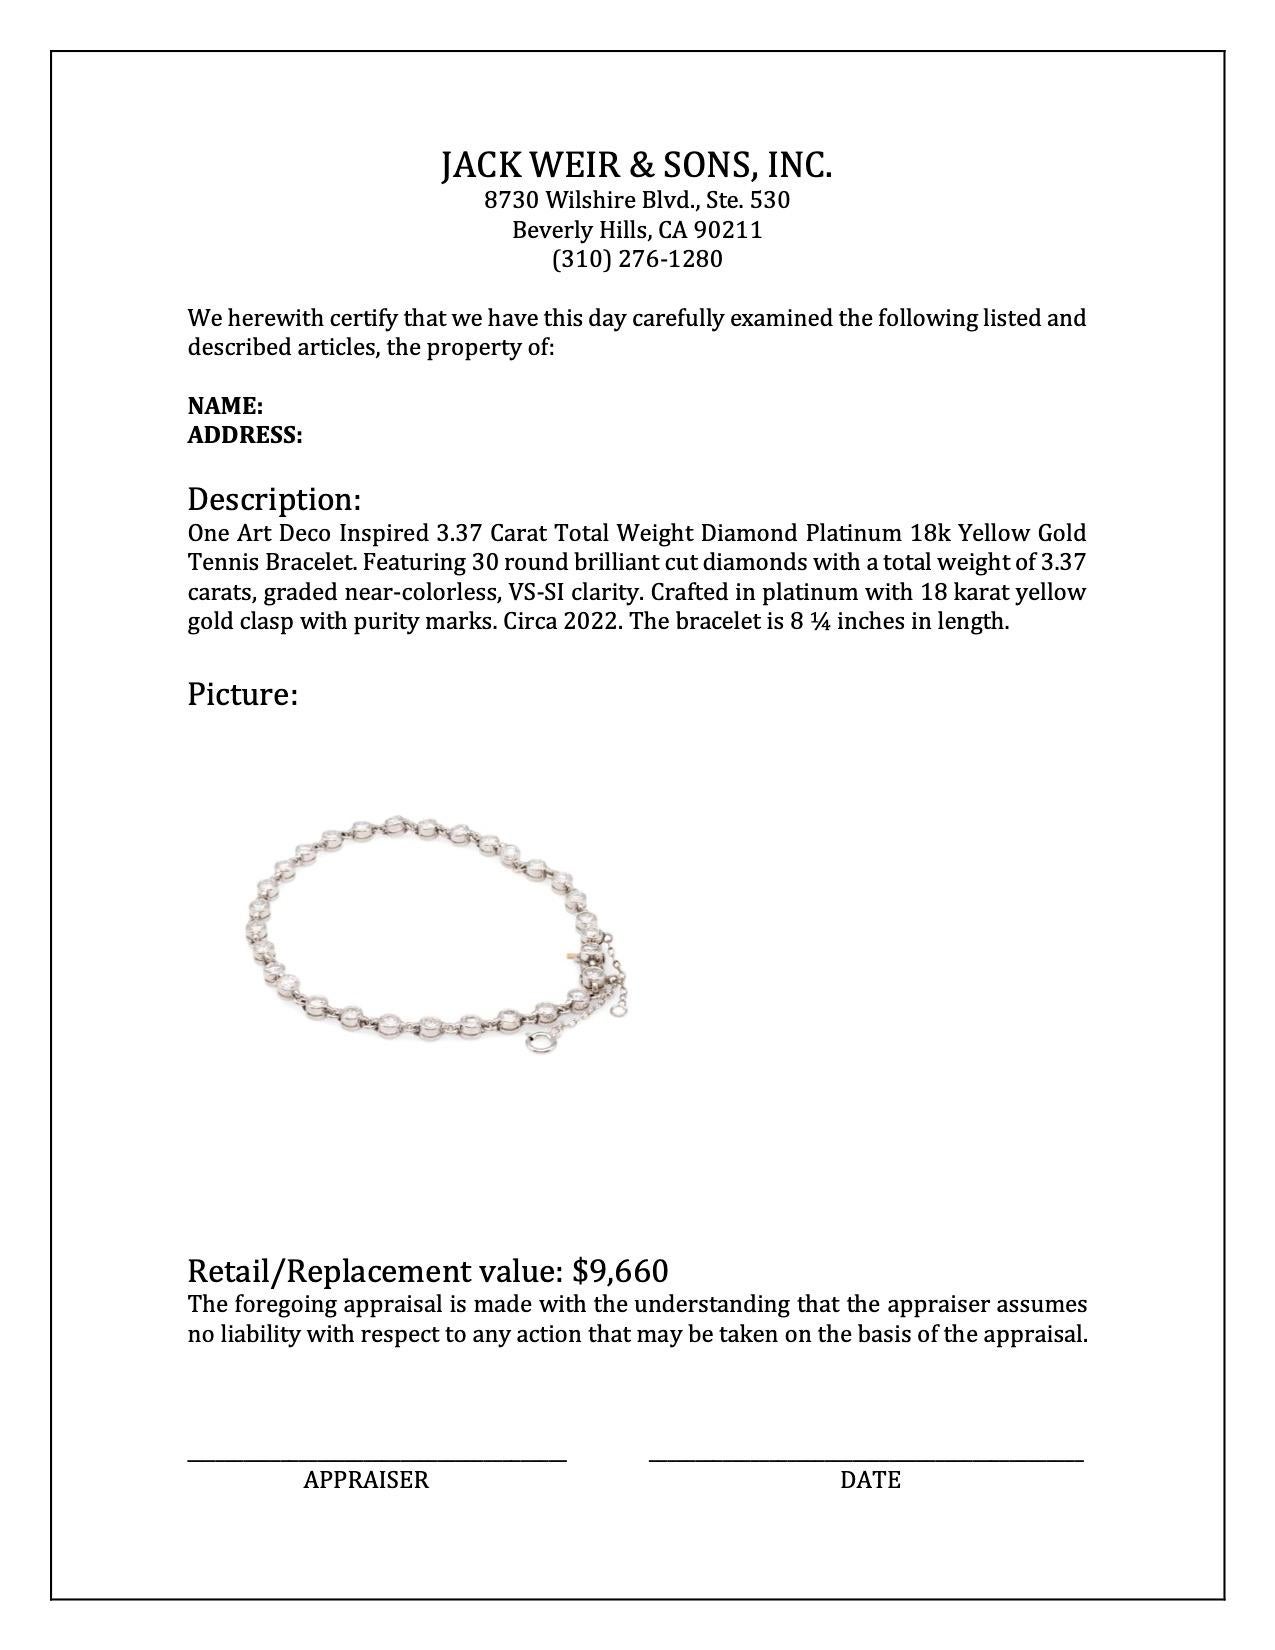 Women's or Men's Art Deco Inspired 3.37 Carat Total Weight Diamond Platinum Tennis Bracelet For Sale